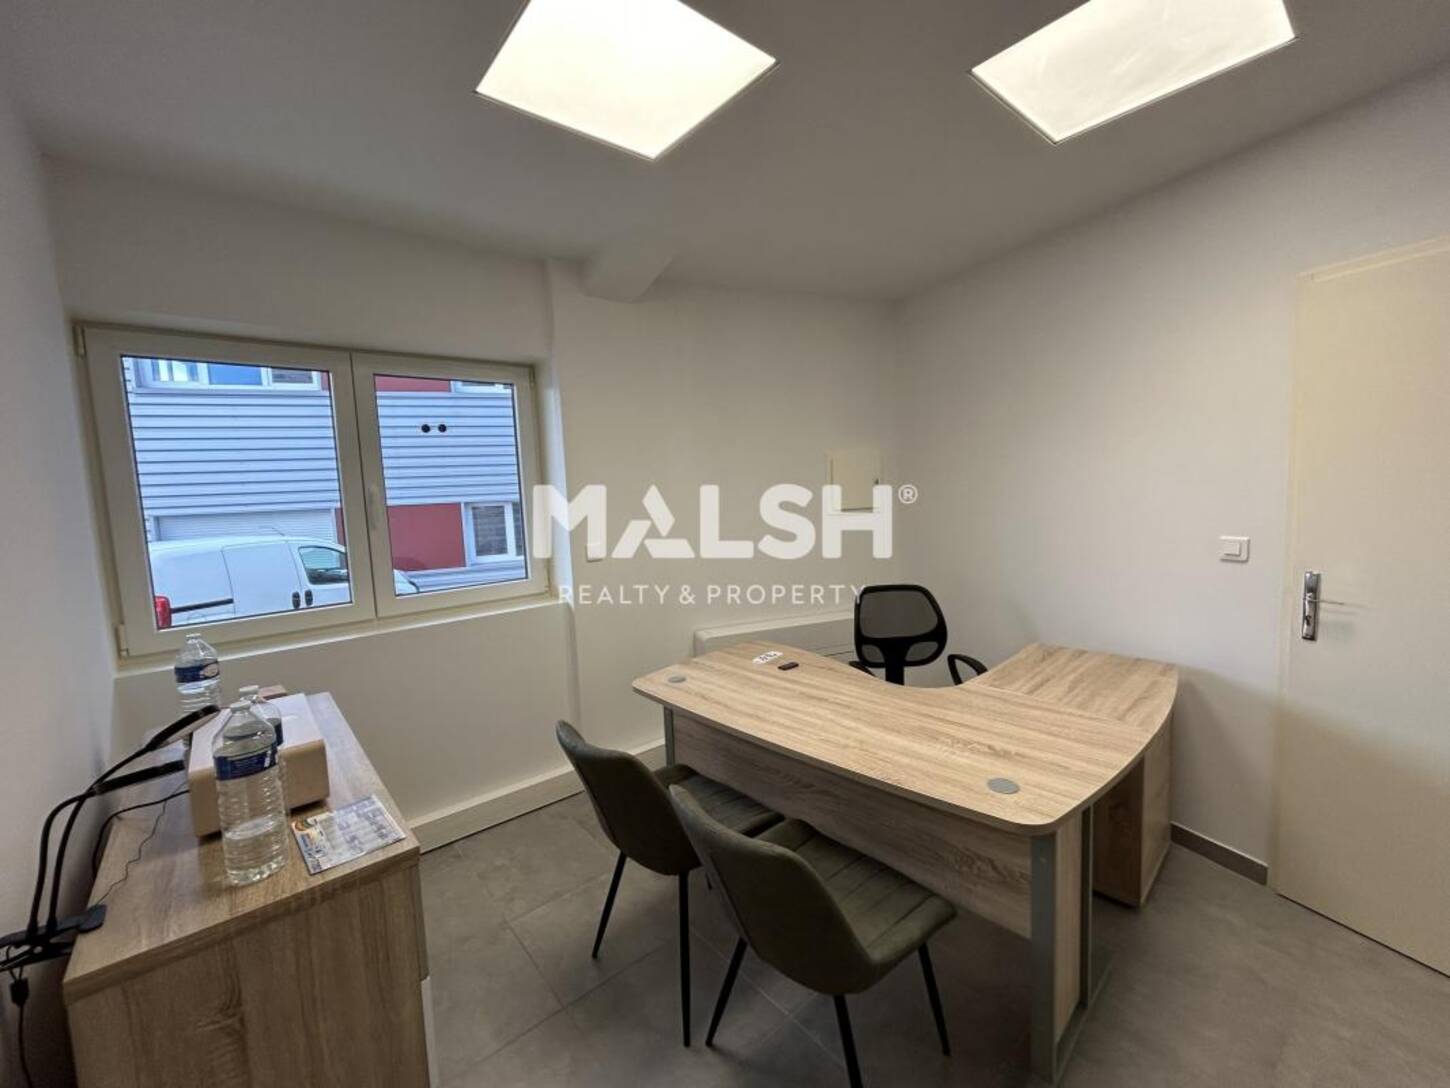 MALSH Realty & Property - Bureau - Lyon Sud Ouest - Chaussan - 2